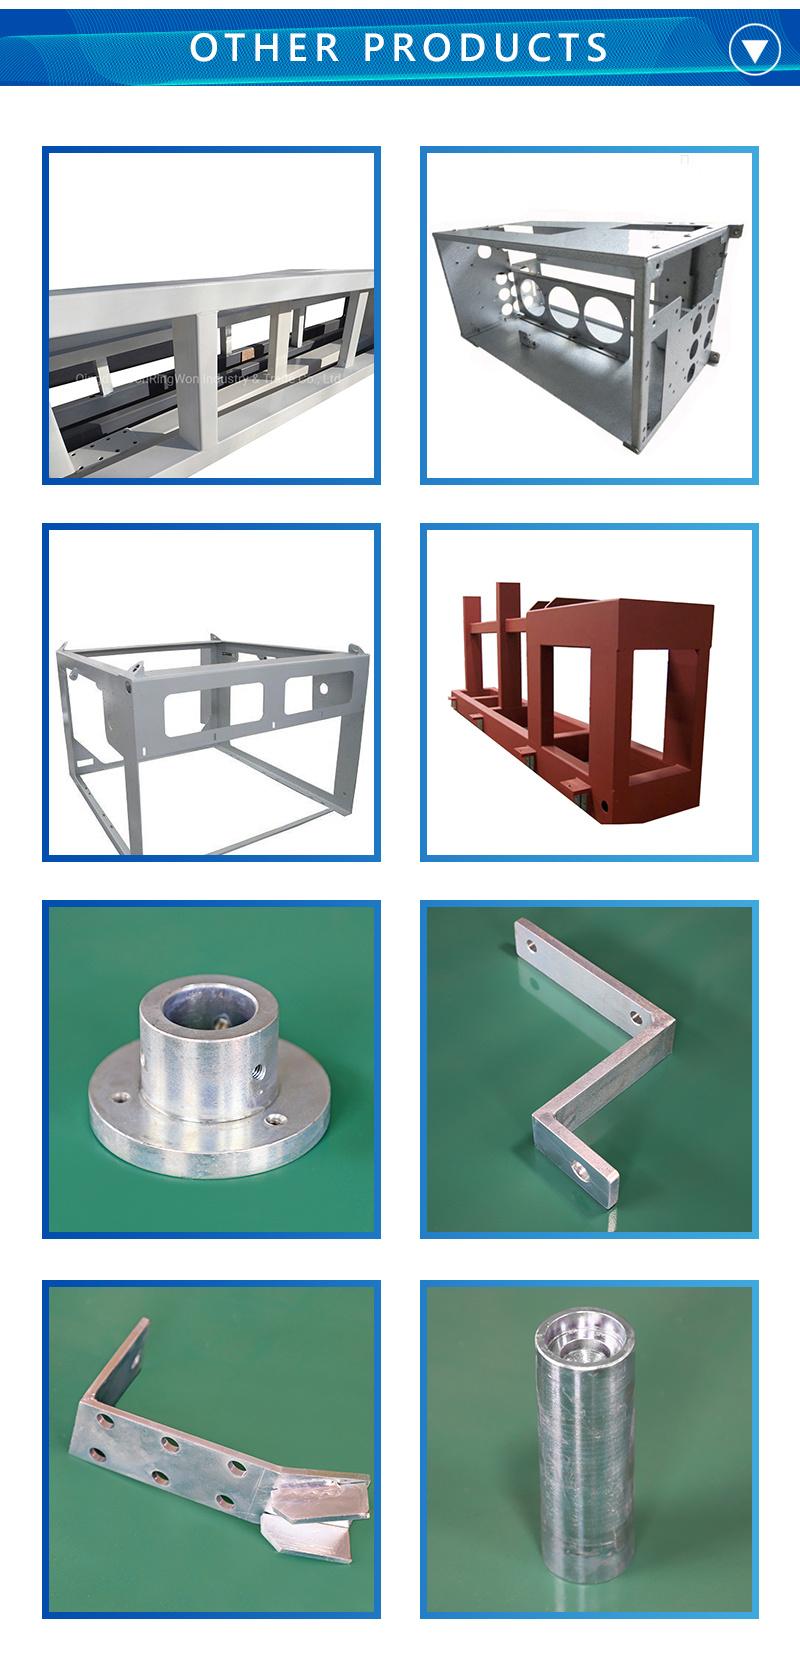 Gravity/Free Stainless Steel Conveyor Roller